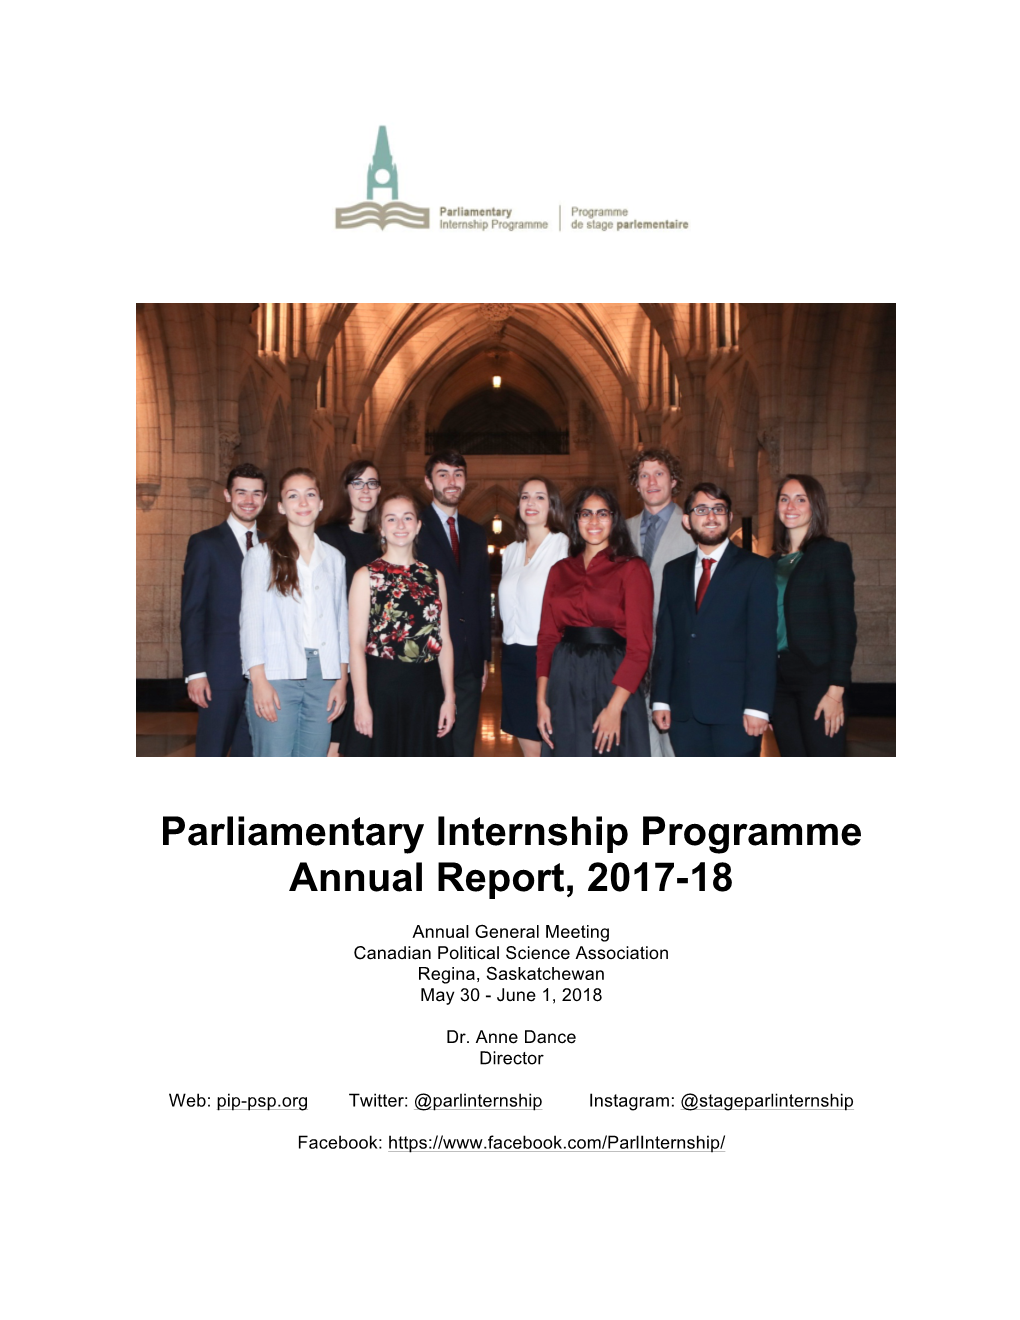 Parliamentary Internship Programme Annual Report, 2017-18